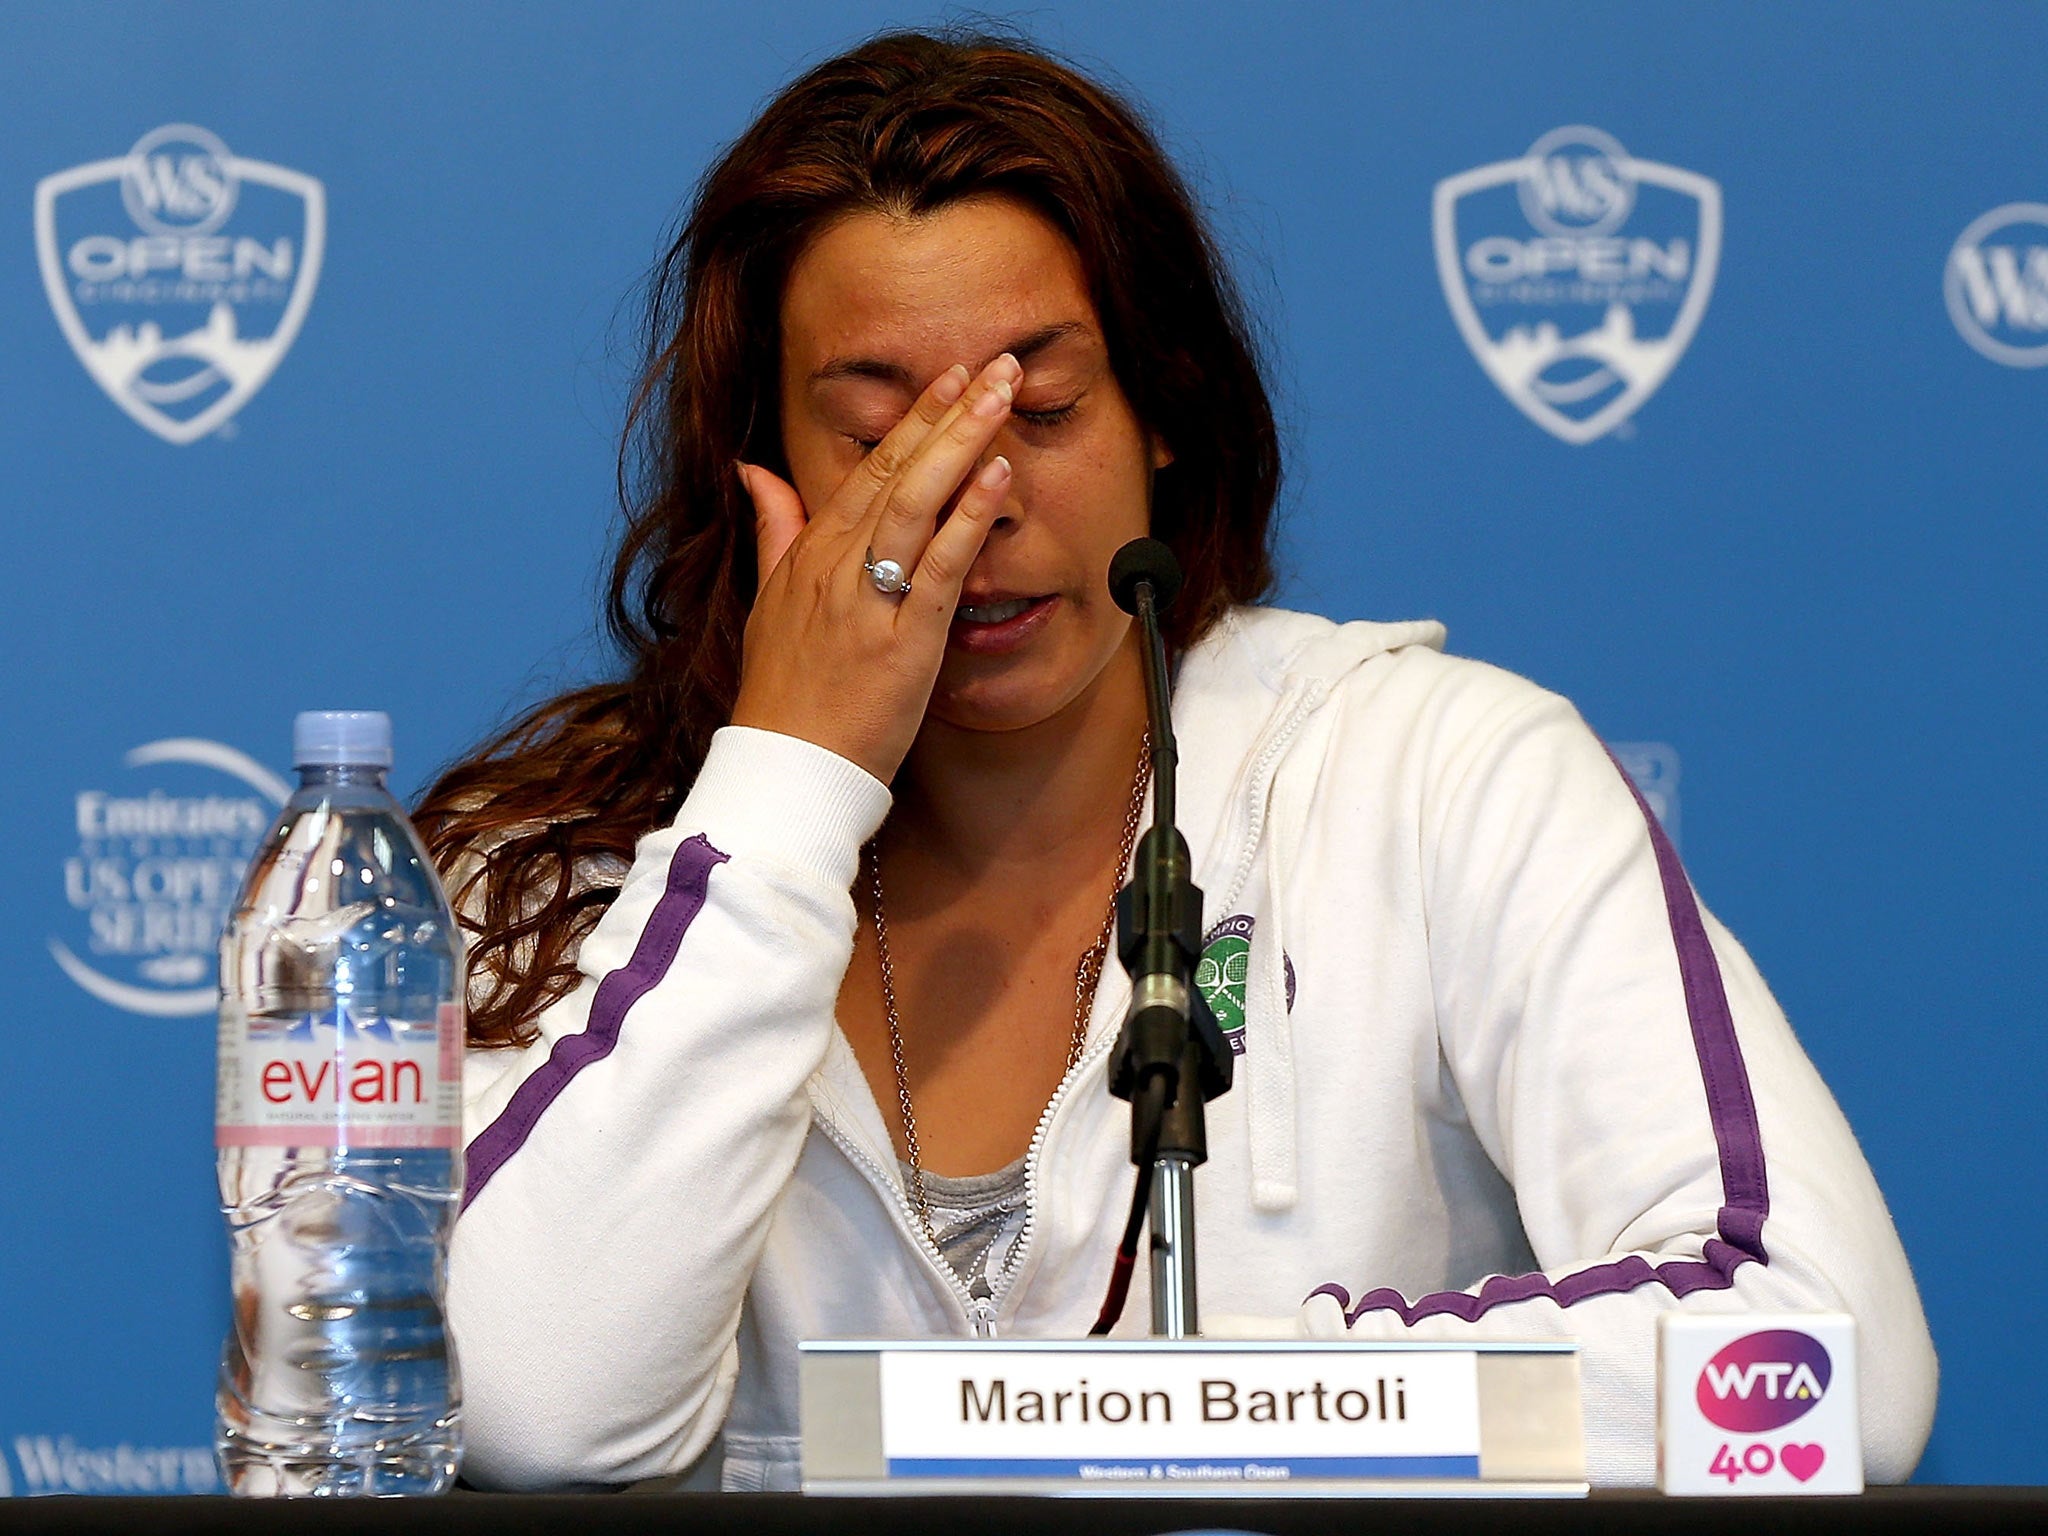 Marion Bartoli announces her retirement